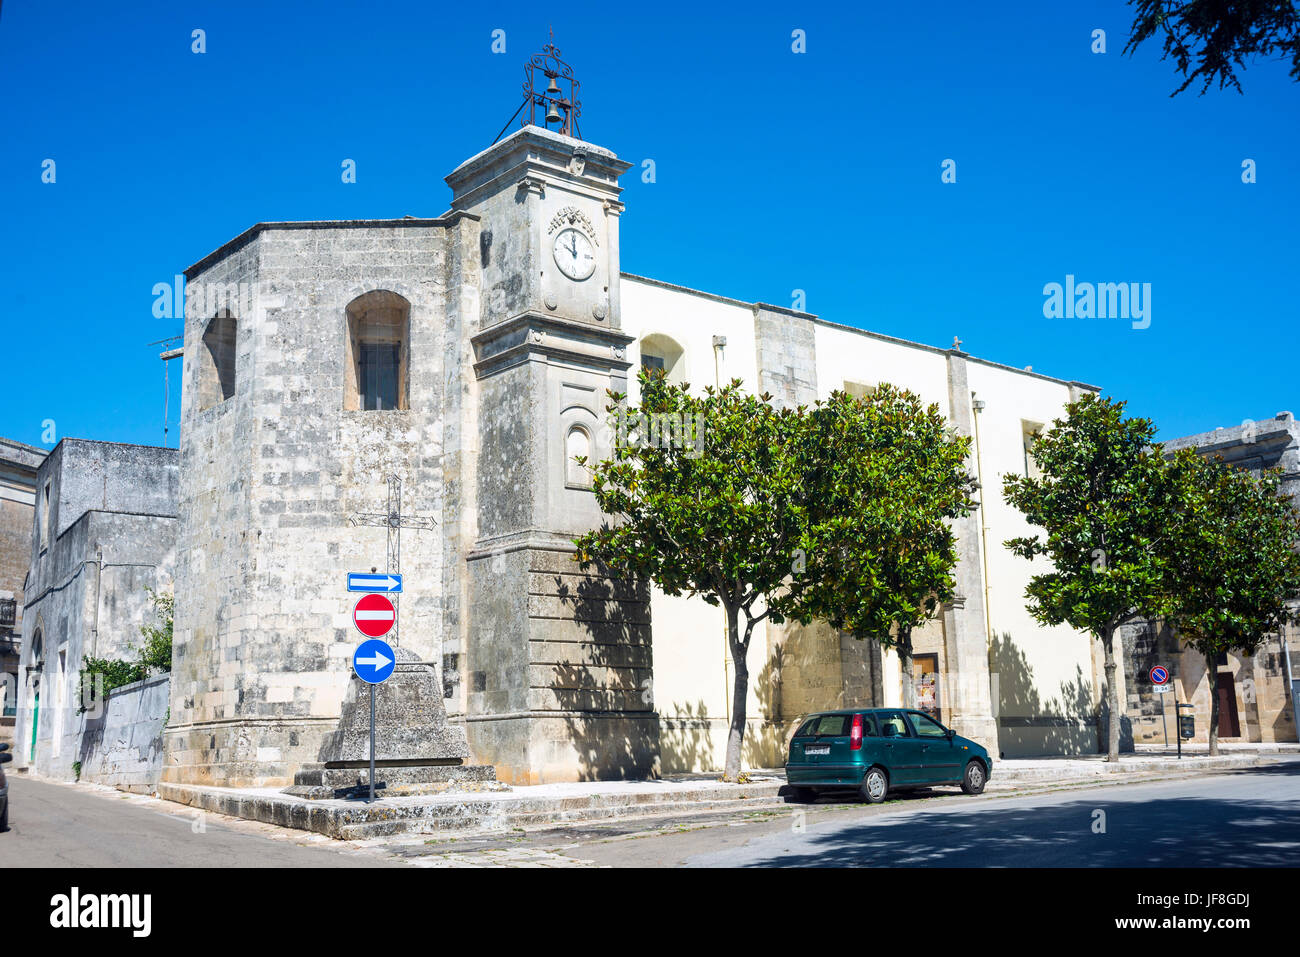 Specchia Gallone is a small village in the Province of Lecce, Puglia, Italy. The parish church sits in the centre of the village. Stock Photo